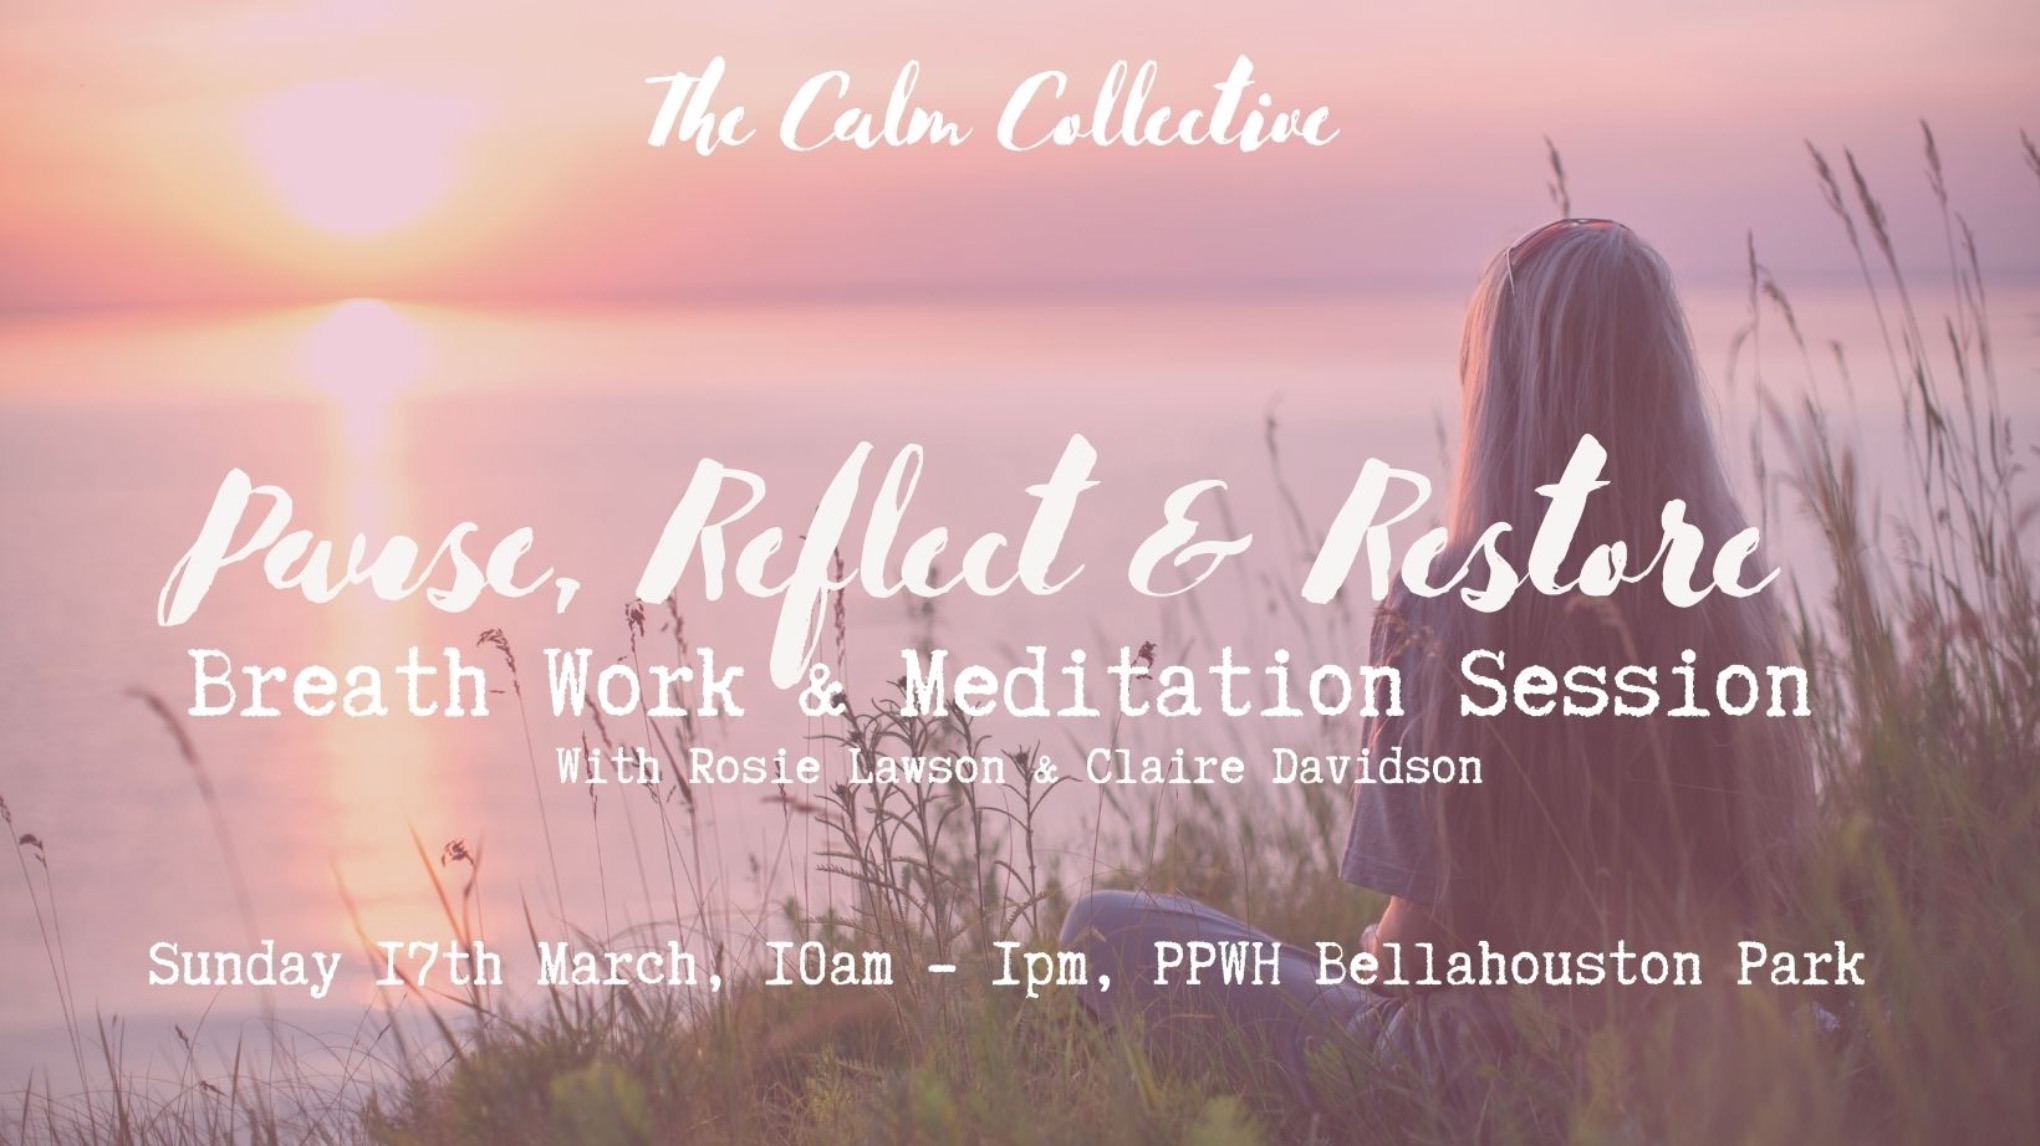 Reflect & Restore: Breath Work & Meditation Morning Retreat